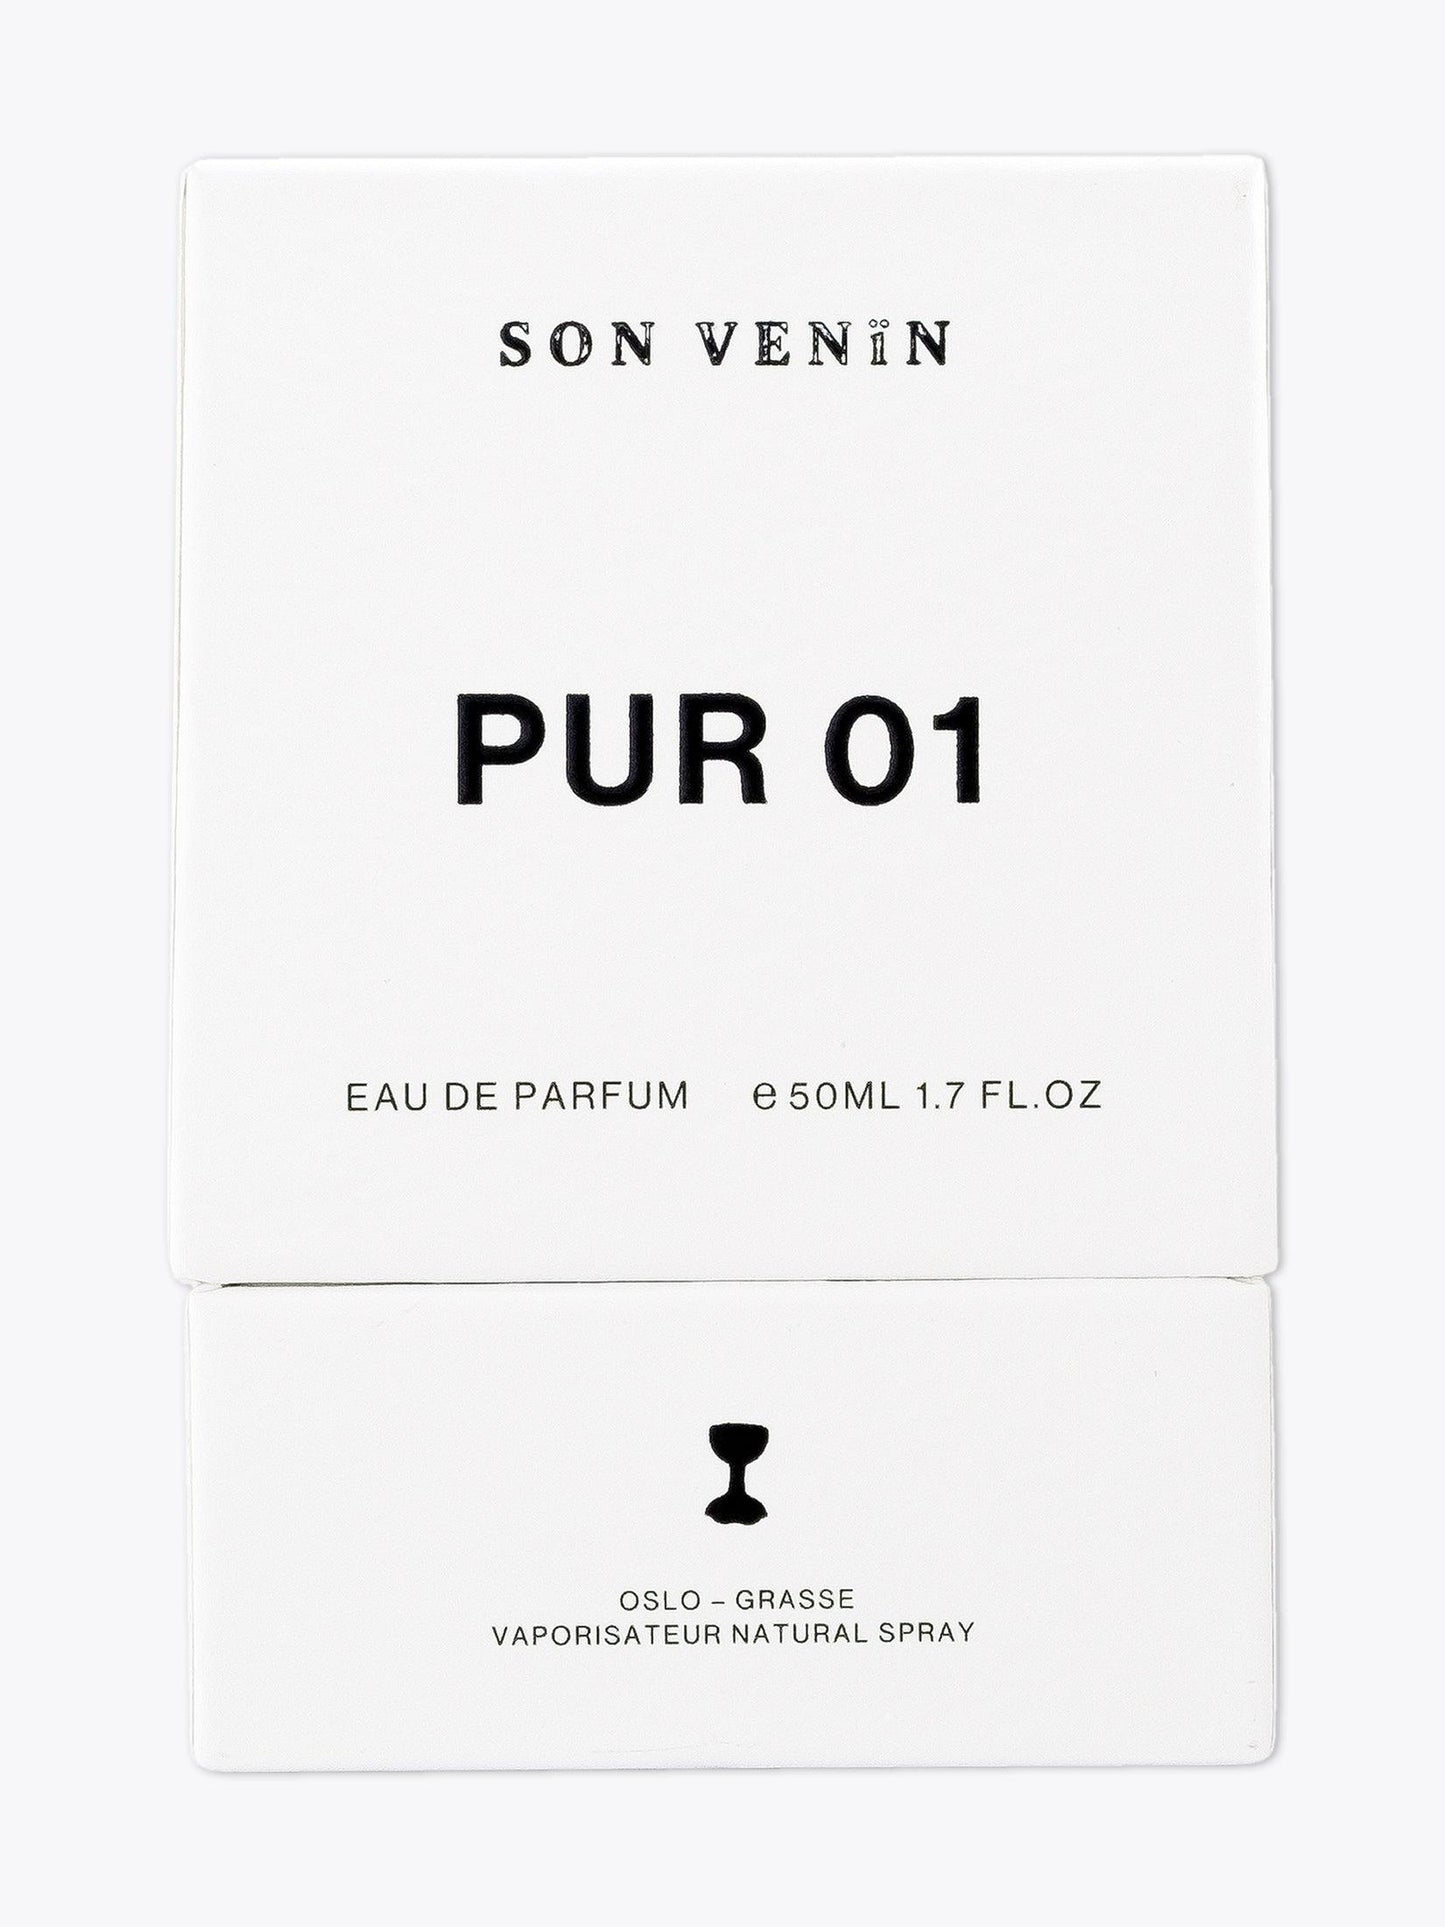 Son Venïn Pur 01 Eau de Parfum 50 ml - APODEP.com